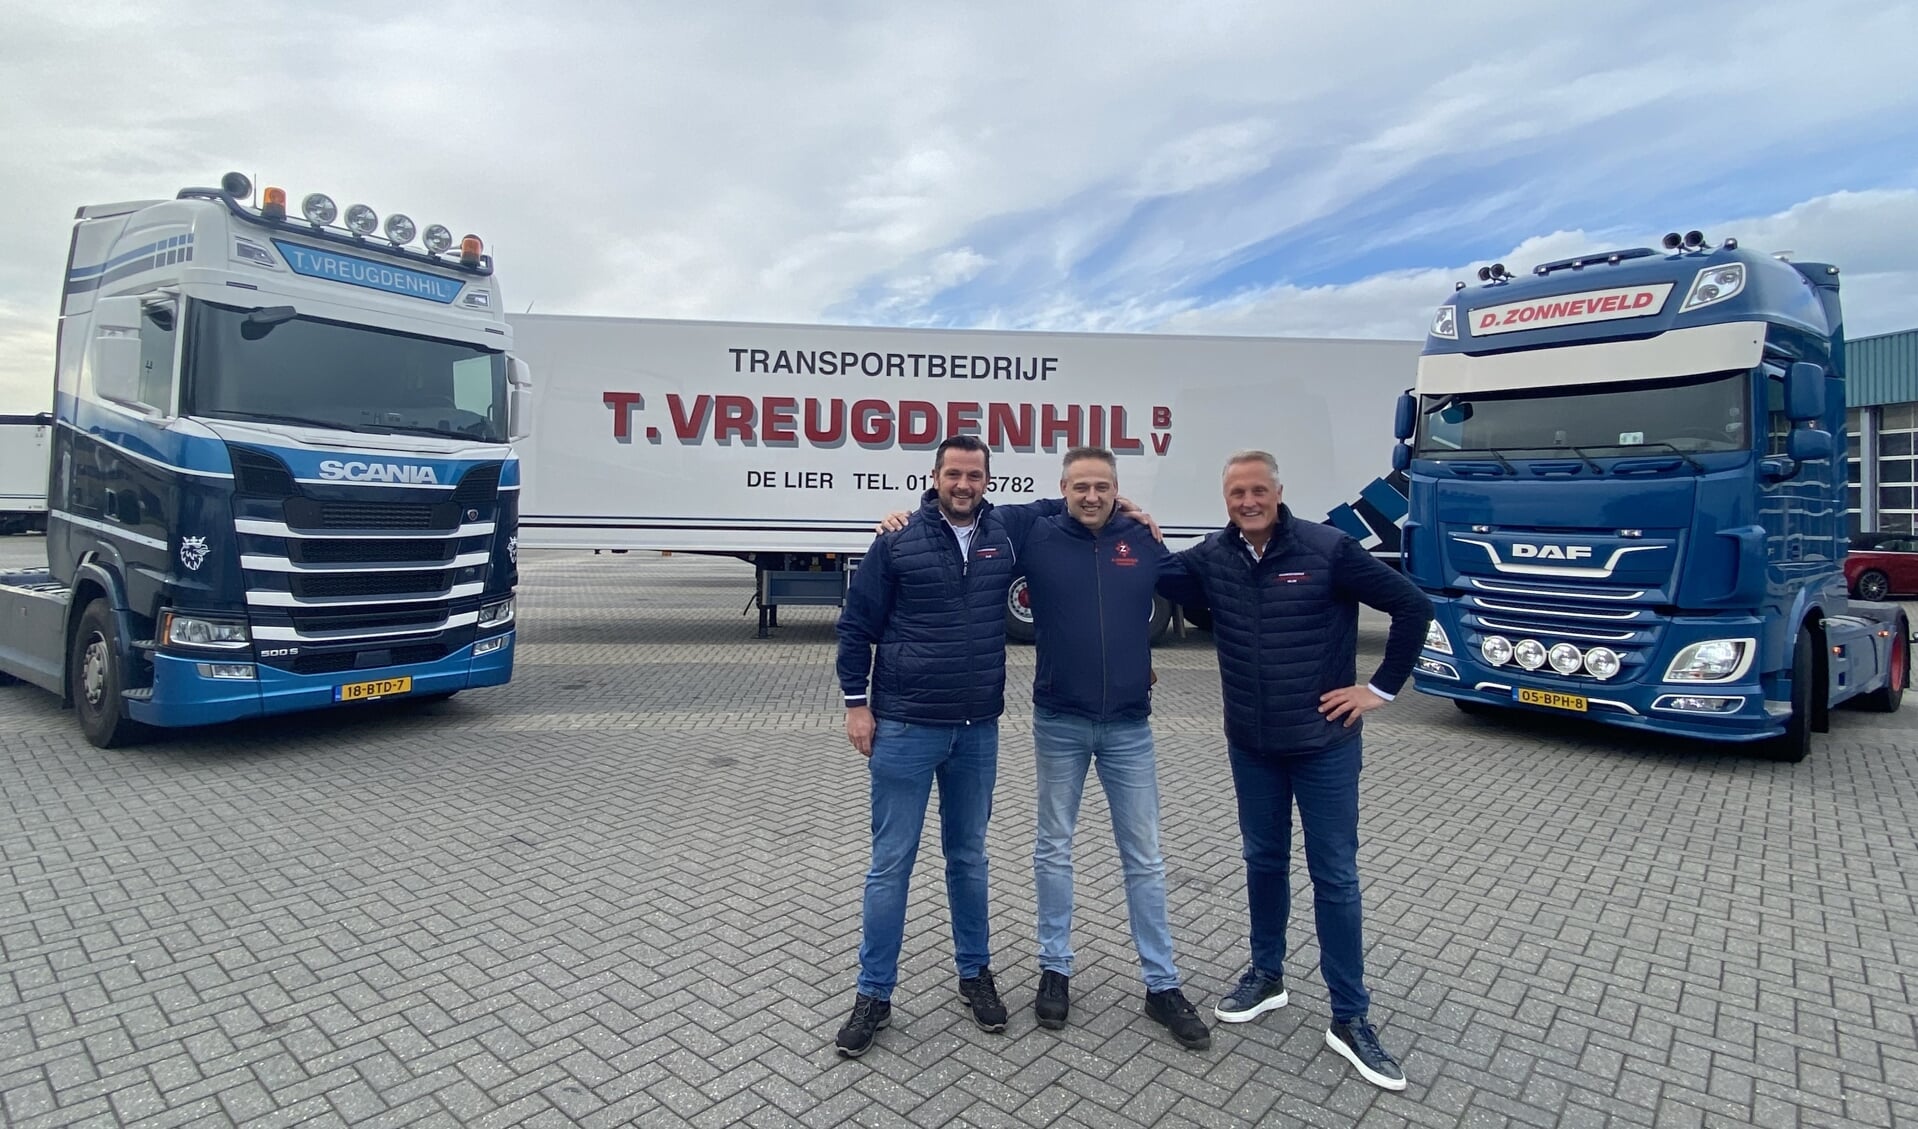 Tim Vreugdenhil, Peter van Velden (D. Zonneveld Transport b.v.) en Ton Vreugdenhil gaan de krachten bundelen. Ze zien de toekomst zonnig tegemoet.